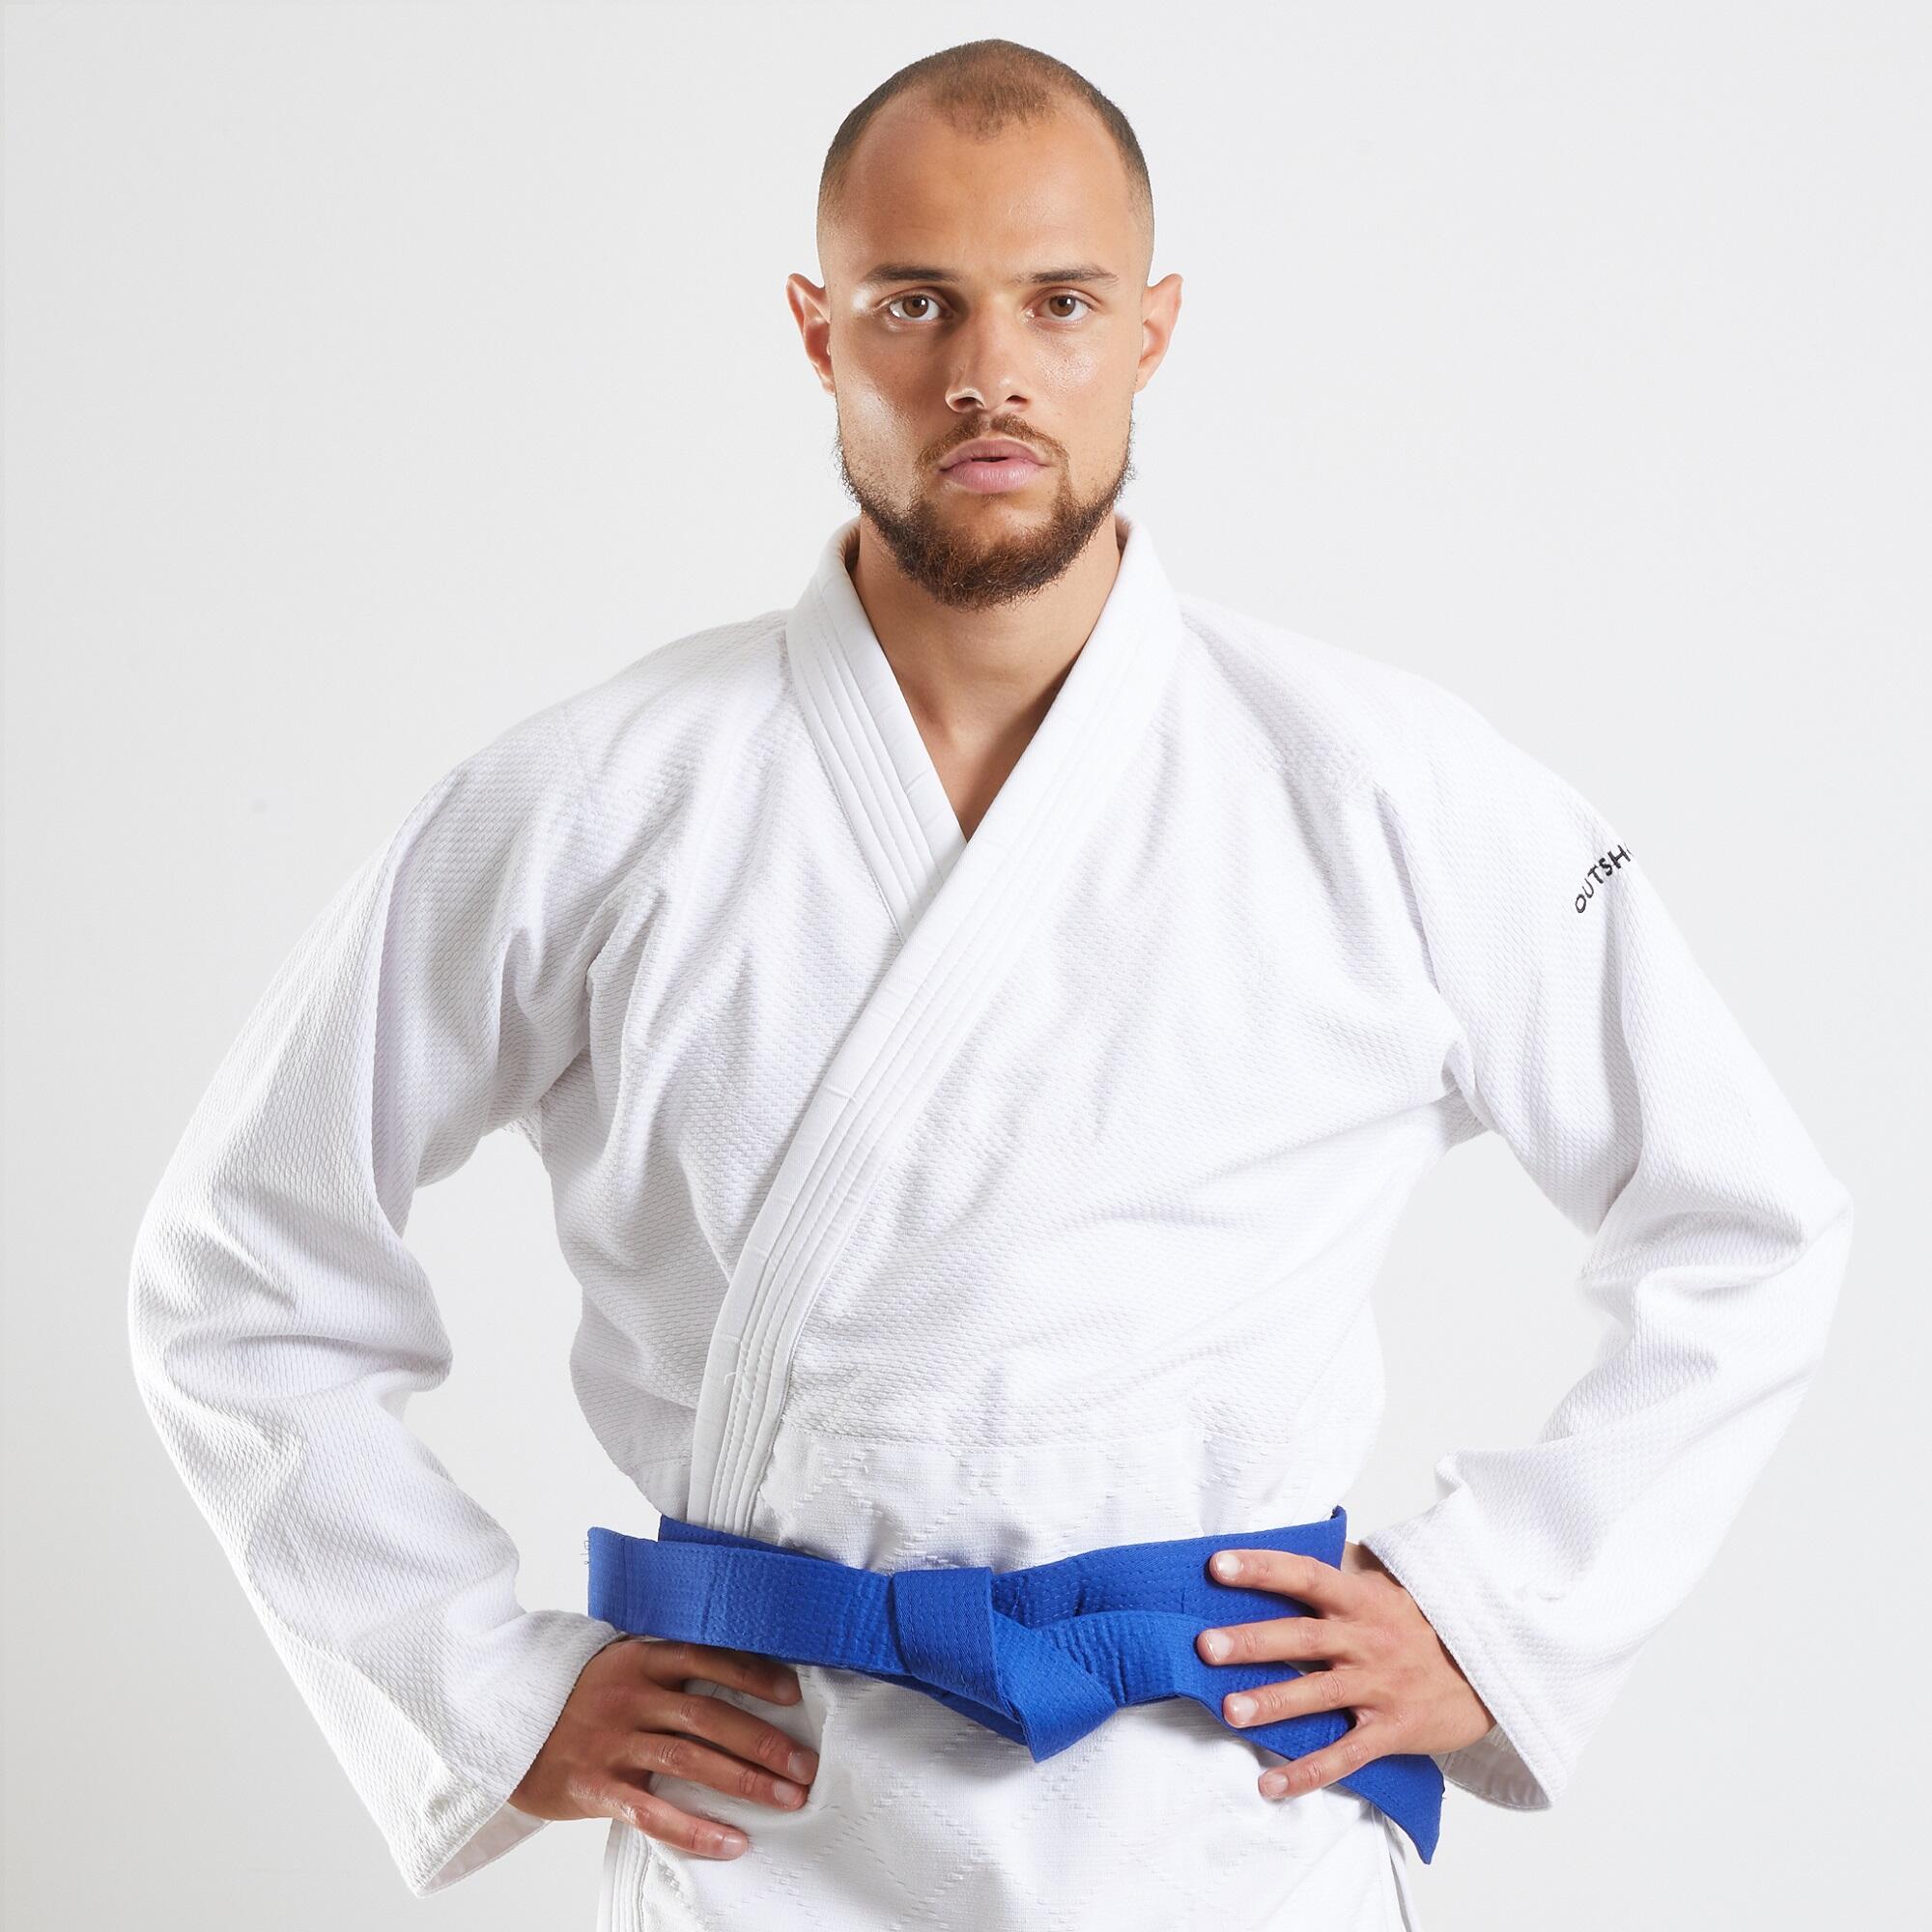 Details about   Cimac Judo Suit Adult 250g Judo Gi Kids Judoka Martial Arts Training Uniform 